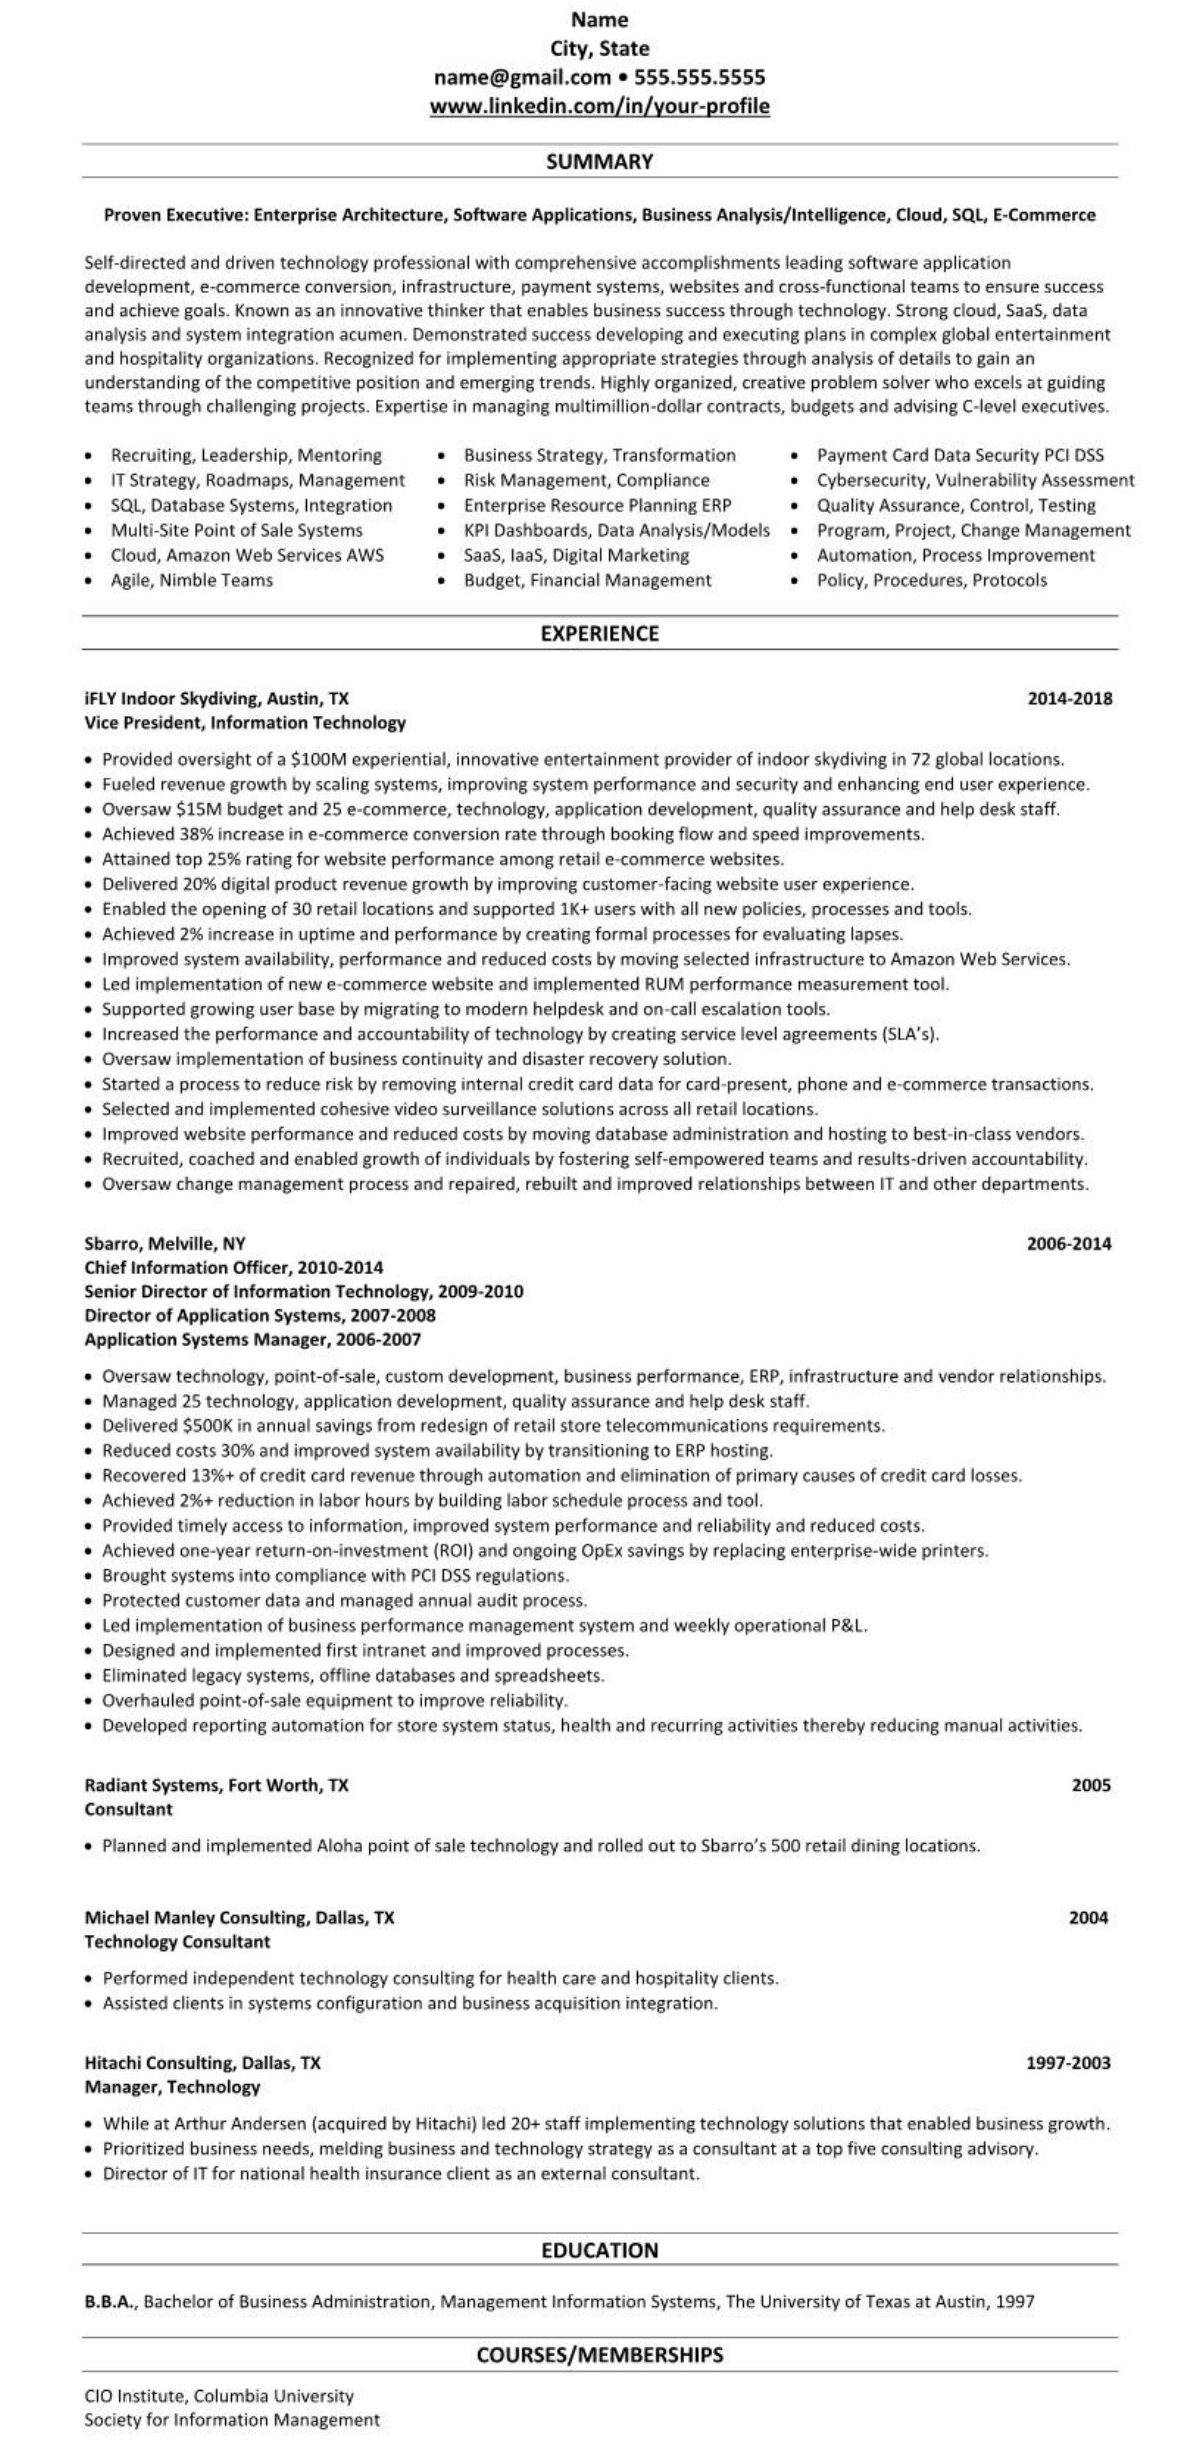 Resume and linkedin writing service